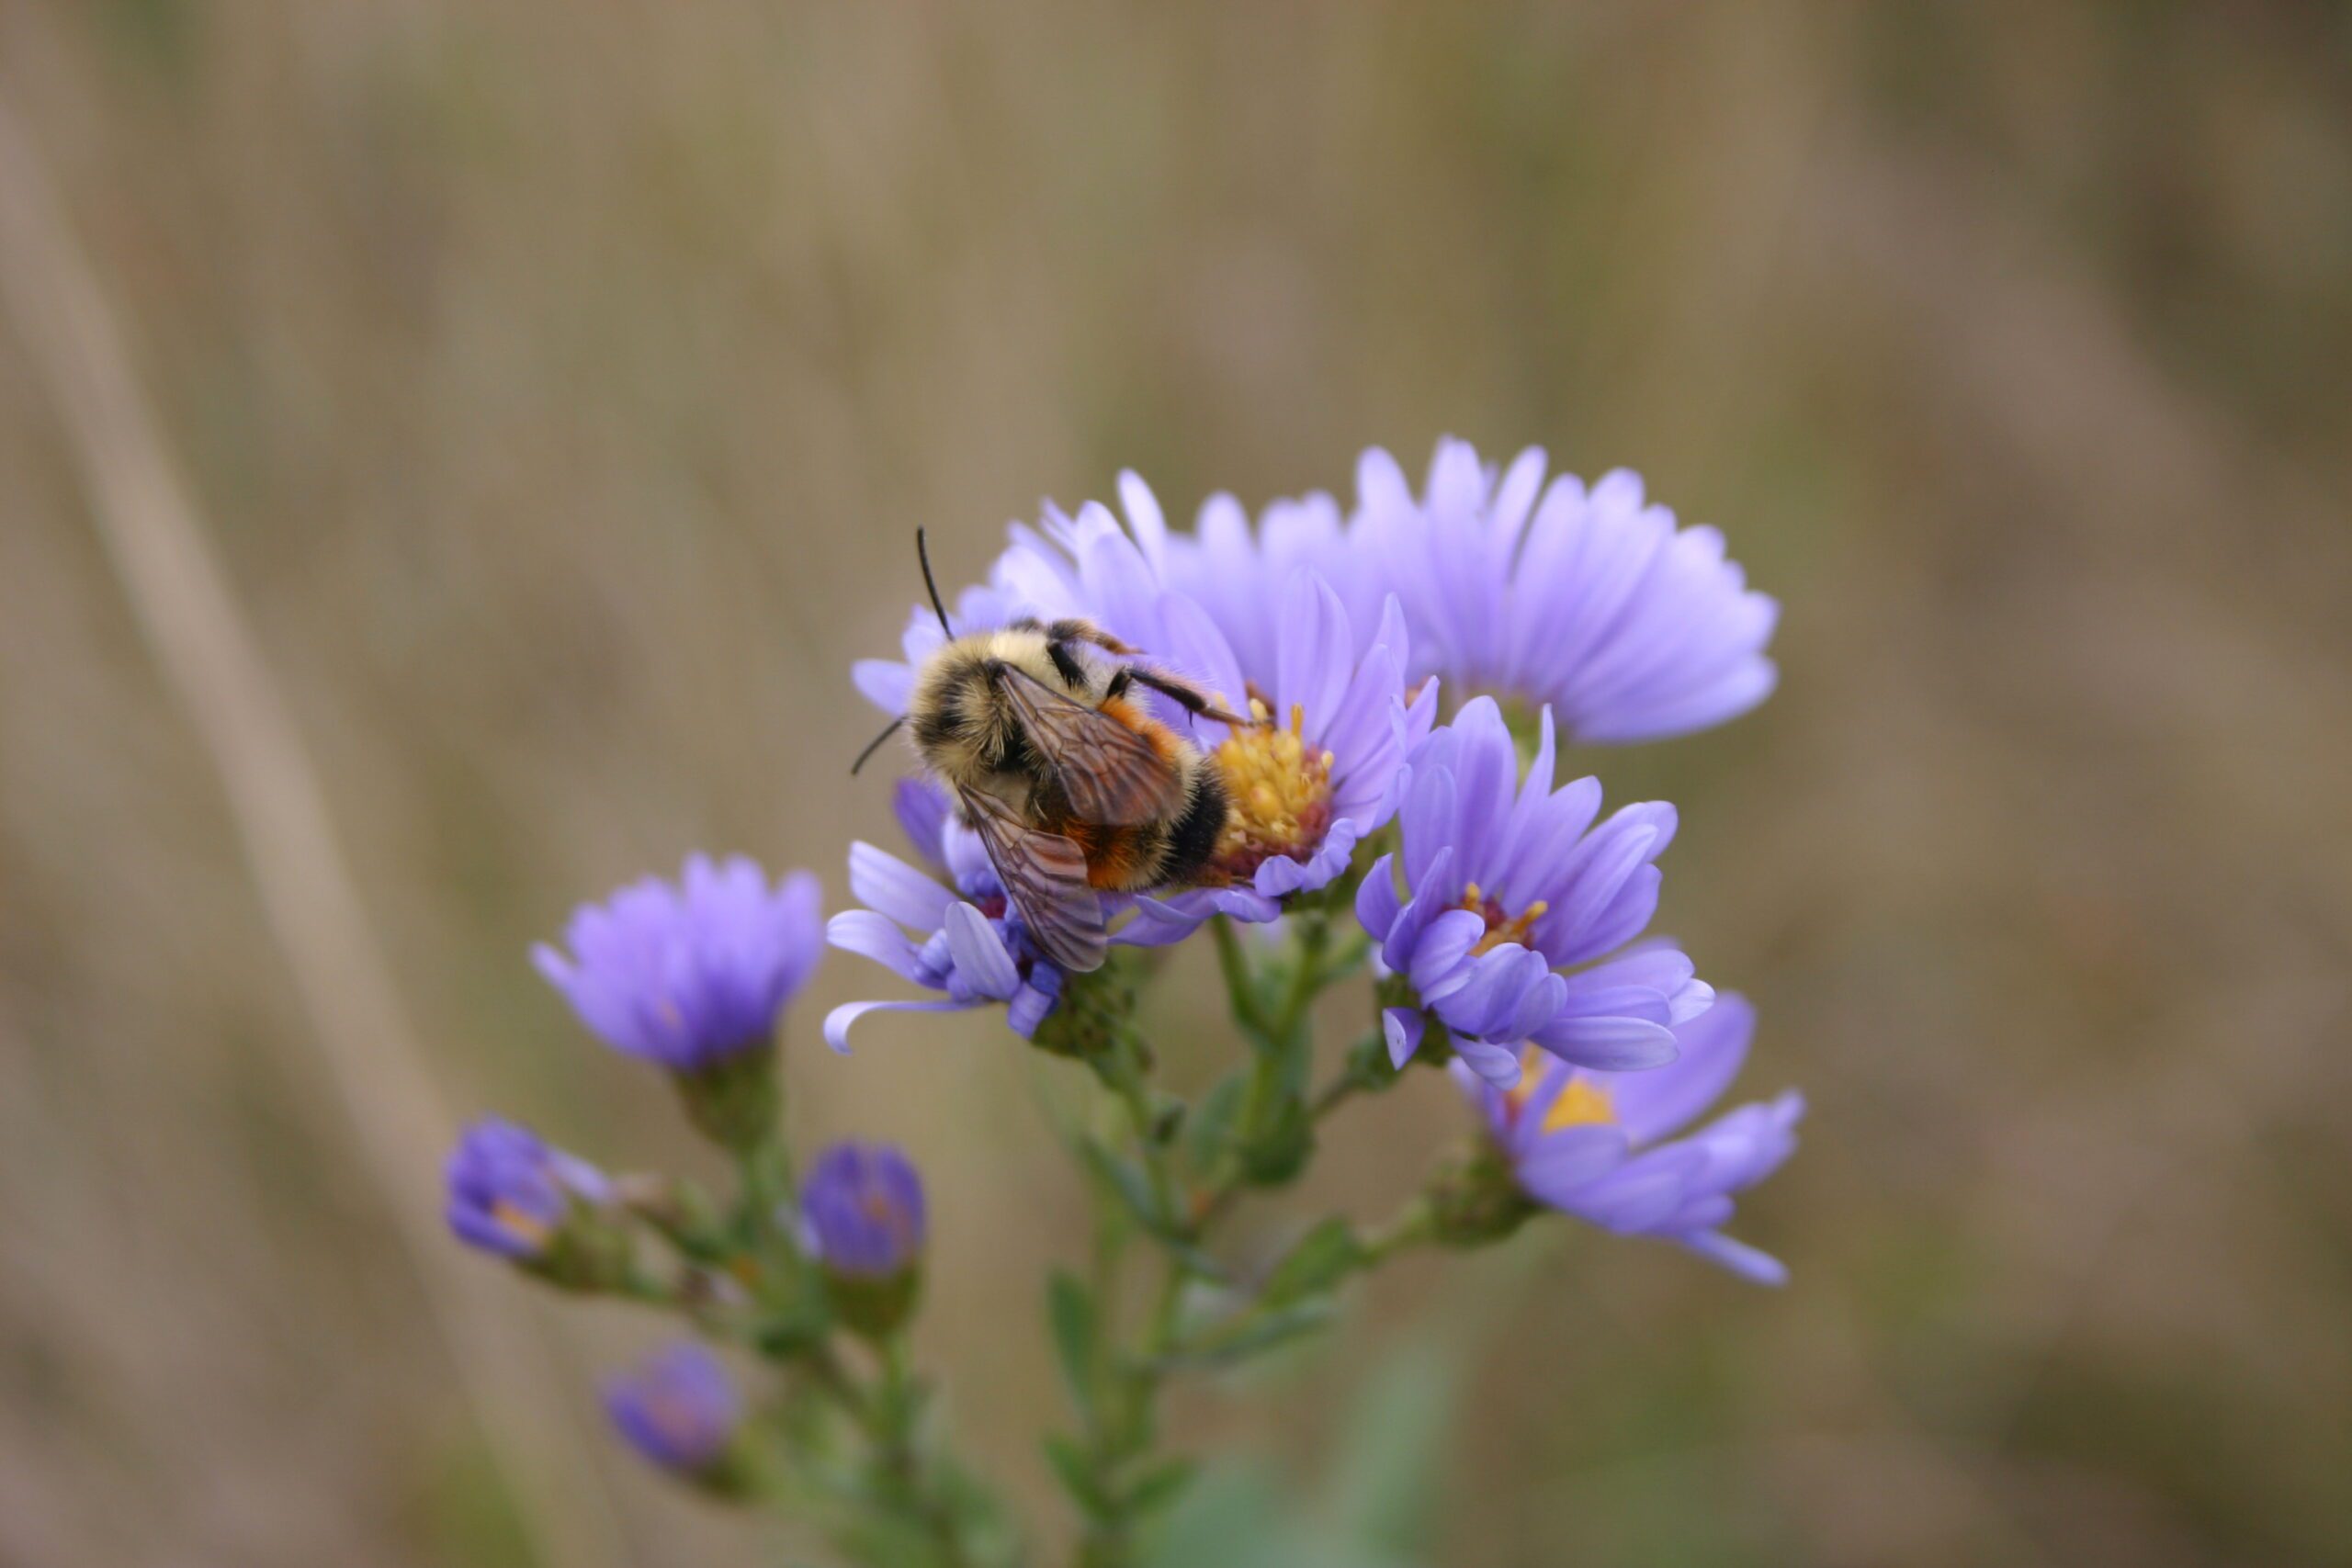 A bumblebee on a small light blue-purple flower.